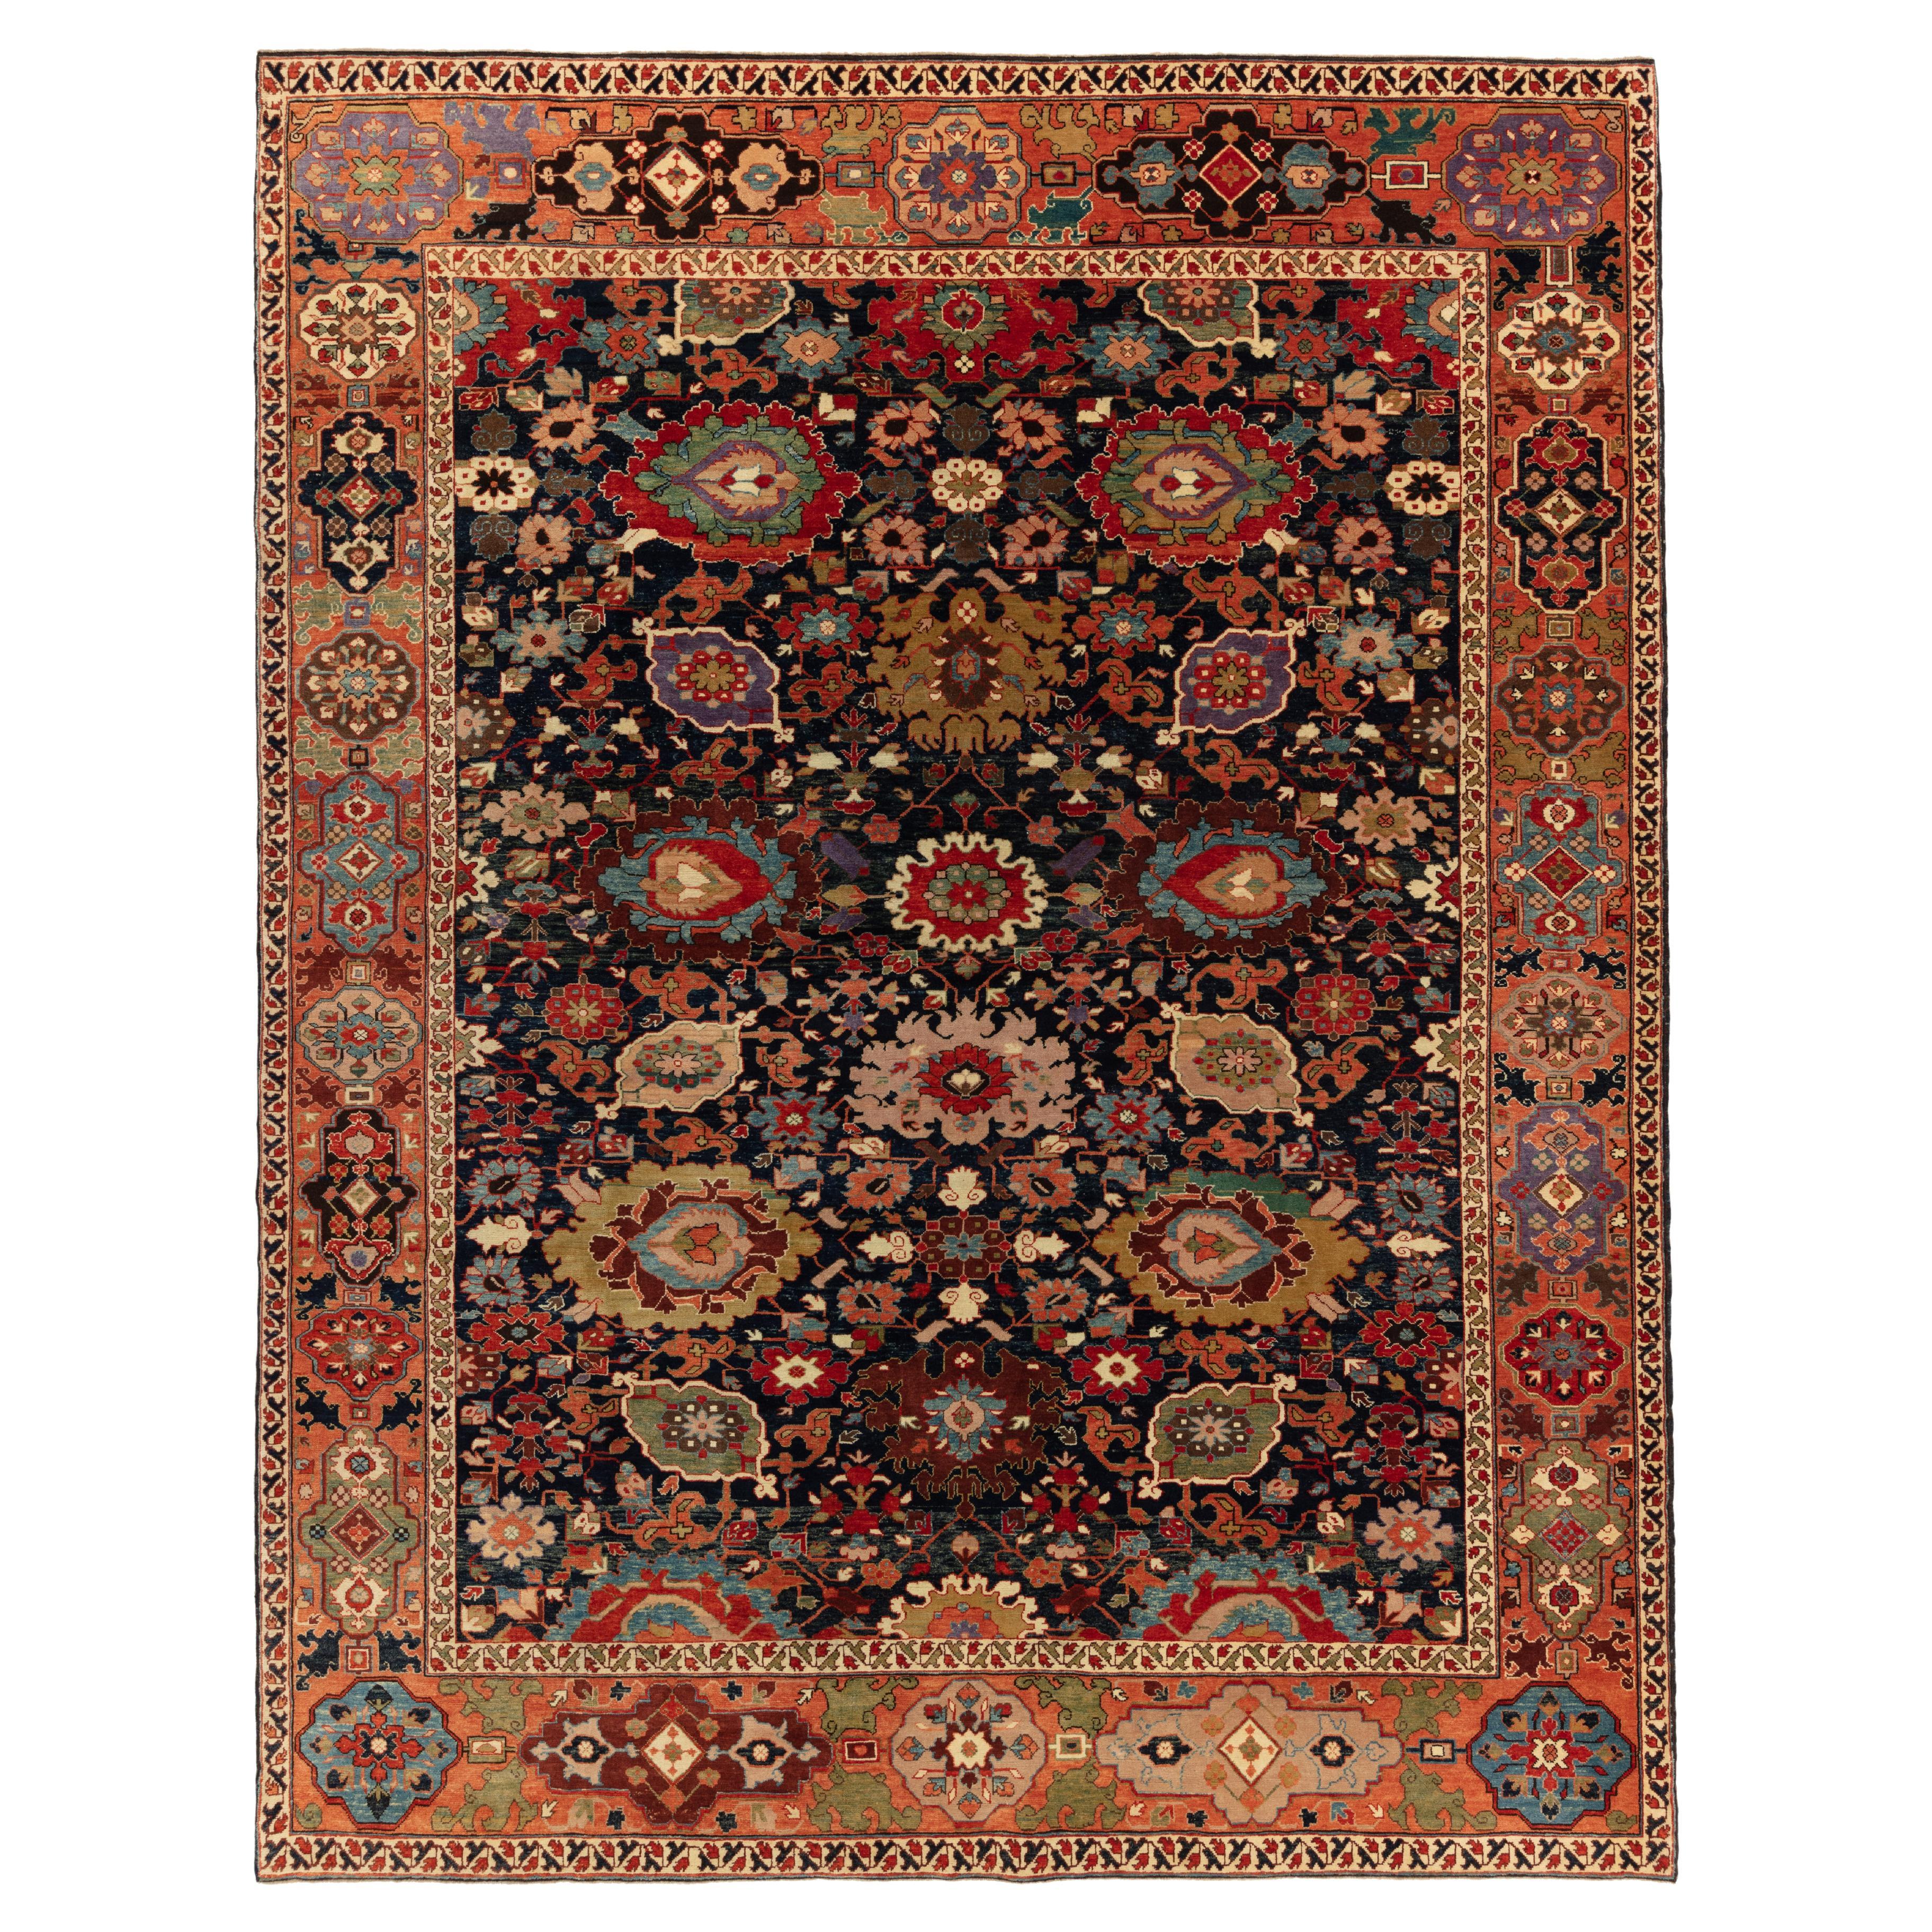 Ararat Rugs Palmette Lattice Rug, 19th Century Revival Carpet, Natural Dyed For Sale